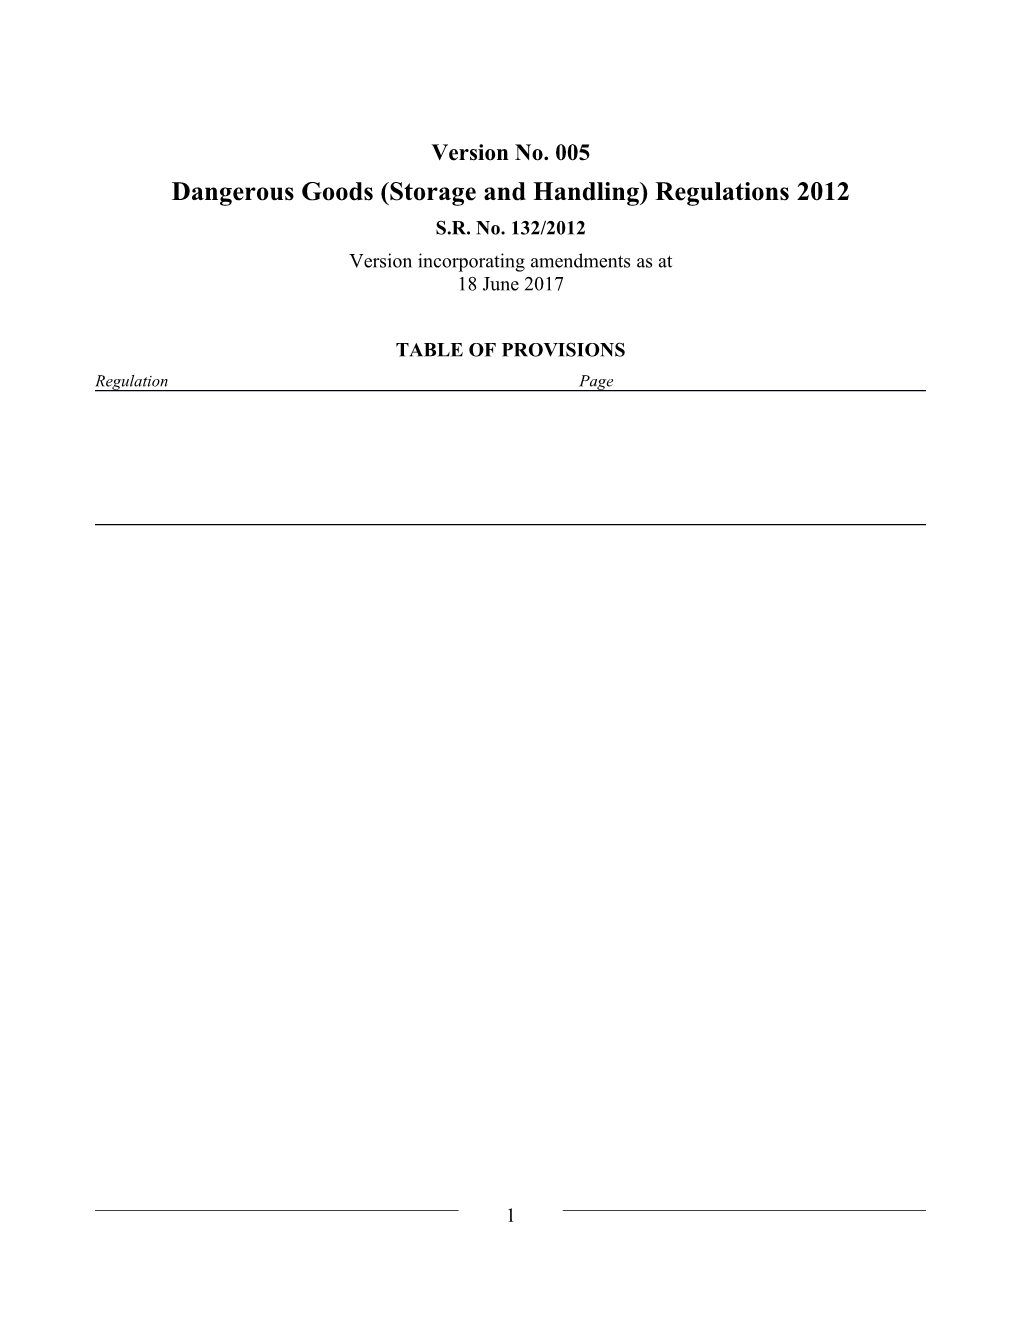 Dangerous Goods (Storage and Handling) Regulations 2012